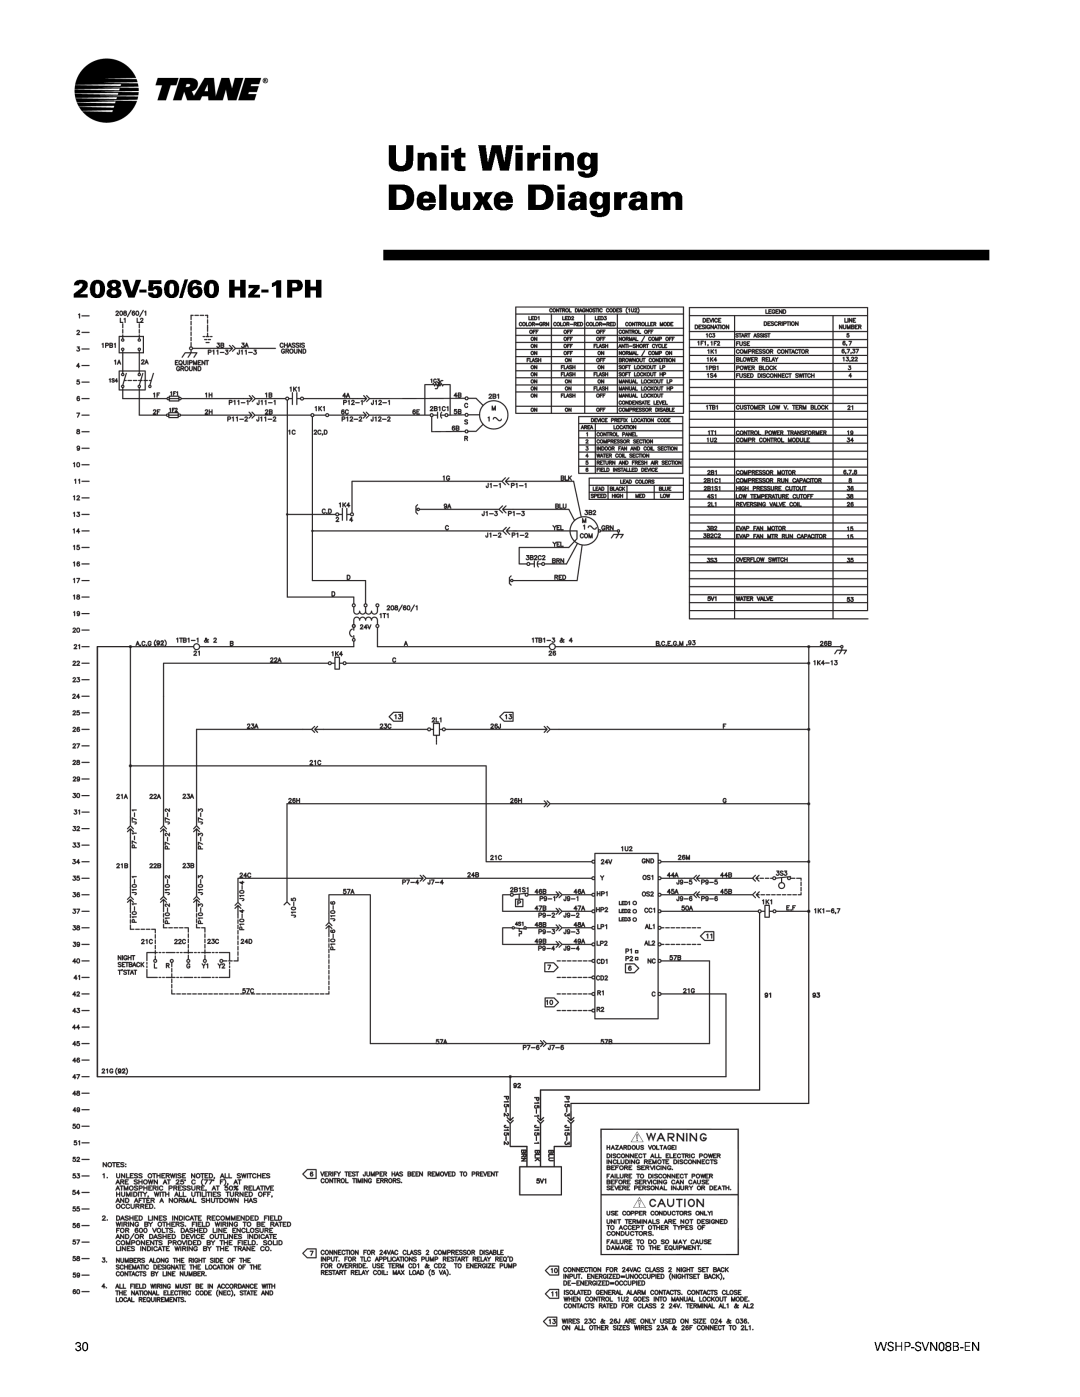 Trane GETB manual Unit Wiring Deluxe Diagram, 208V-50/60 Hz-1PH 